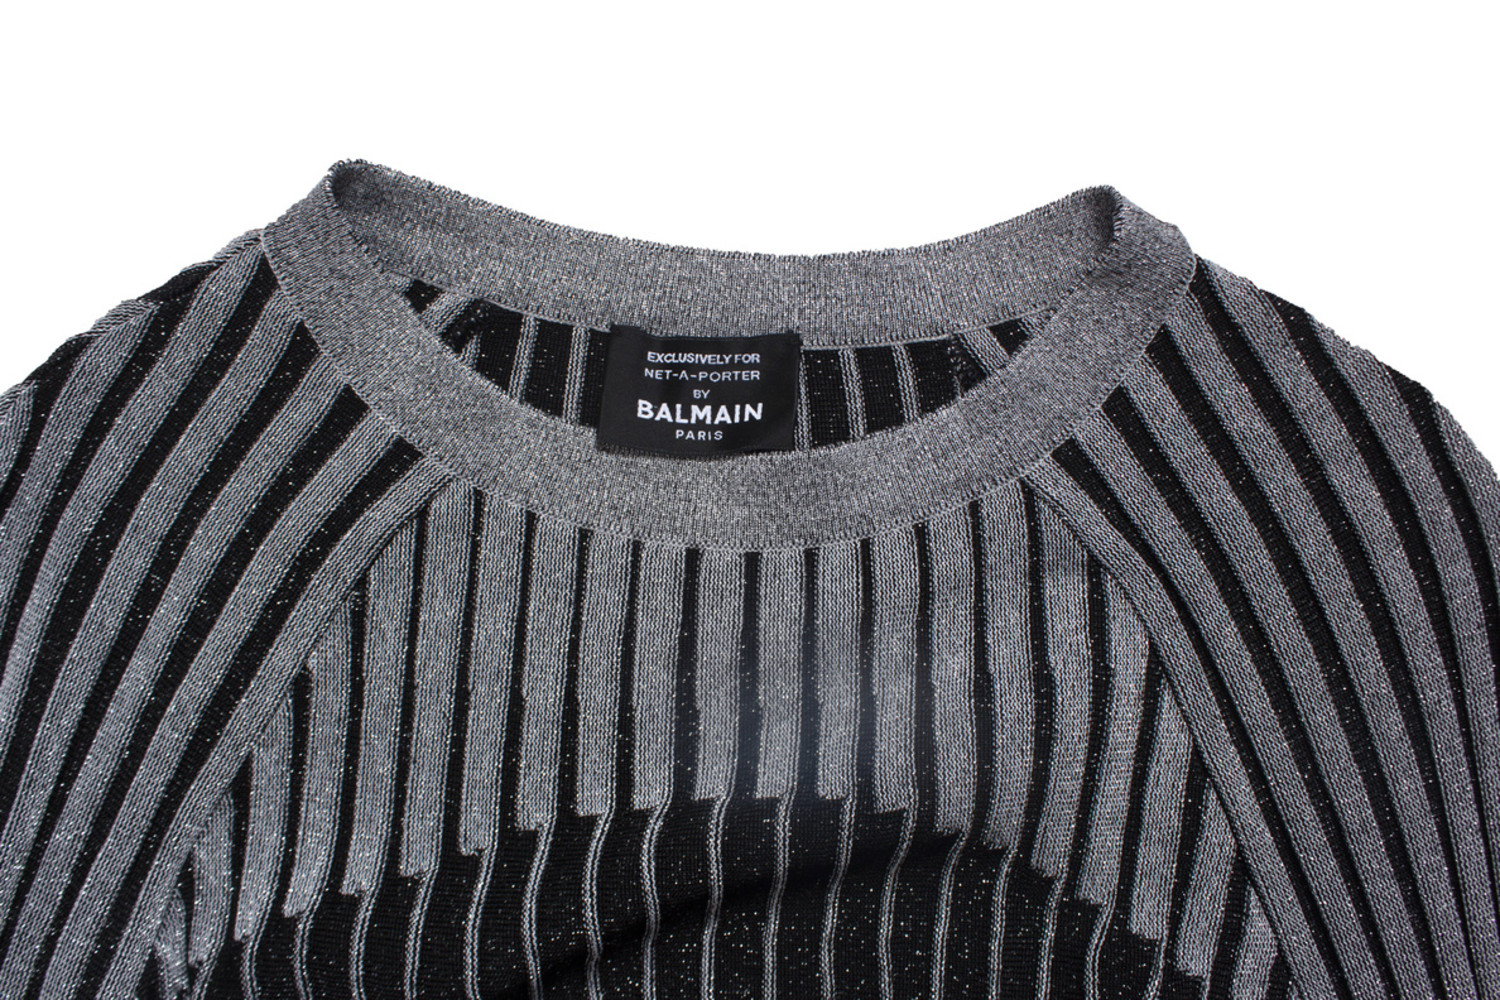 Balmain, cropped metallic ribbed knit top - Unique Designer Pieces